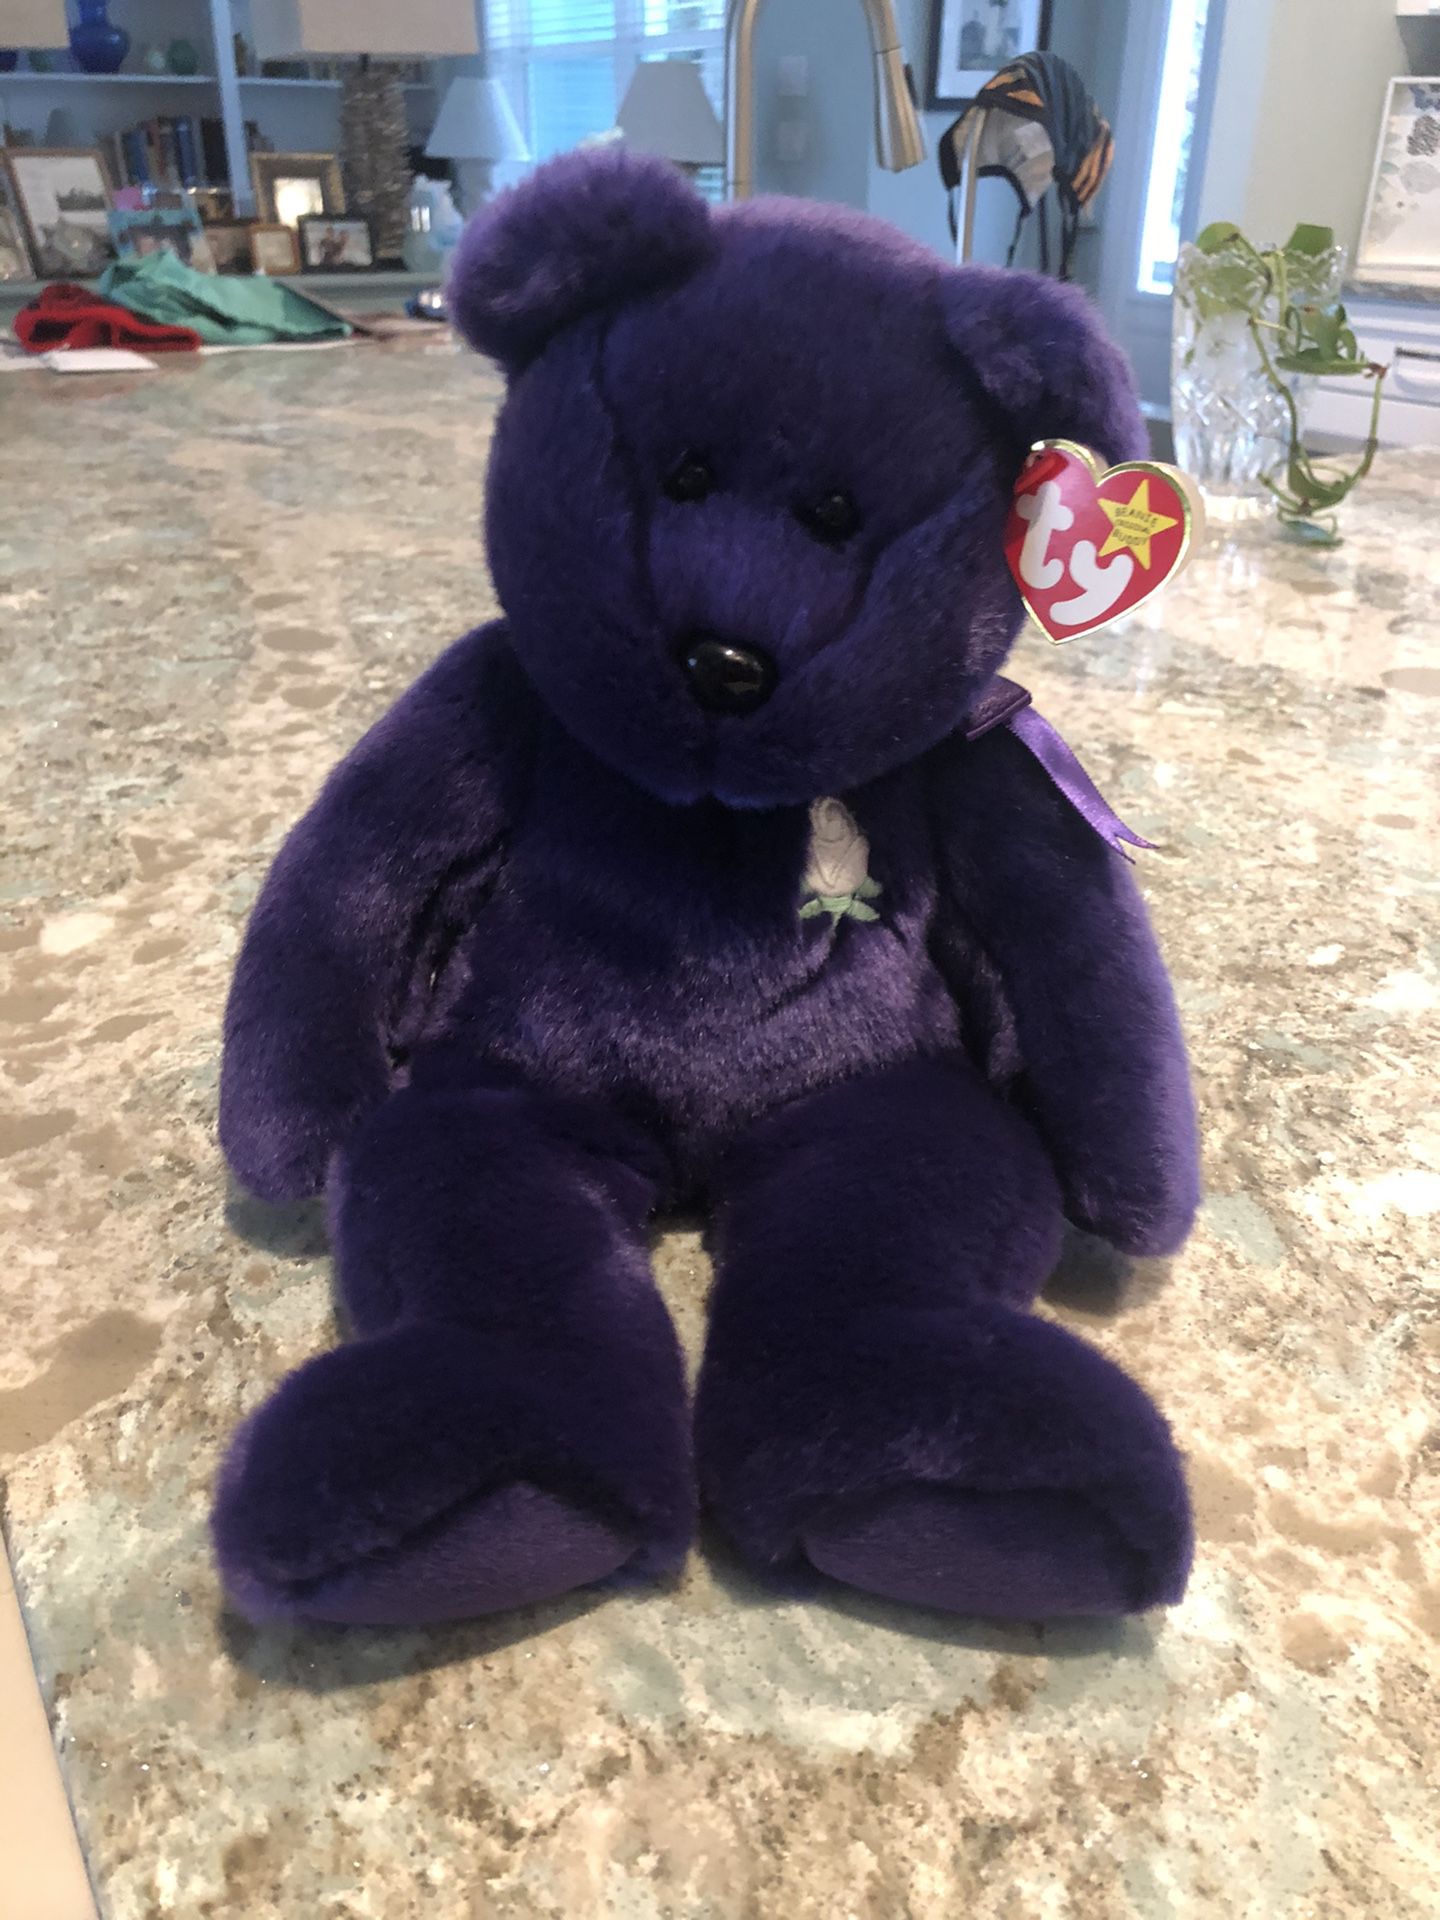 TY BeanyBaby Stuffed Plush Teddy Bear Made for Princess Diana